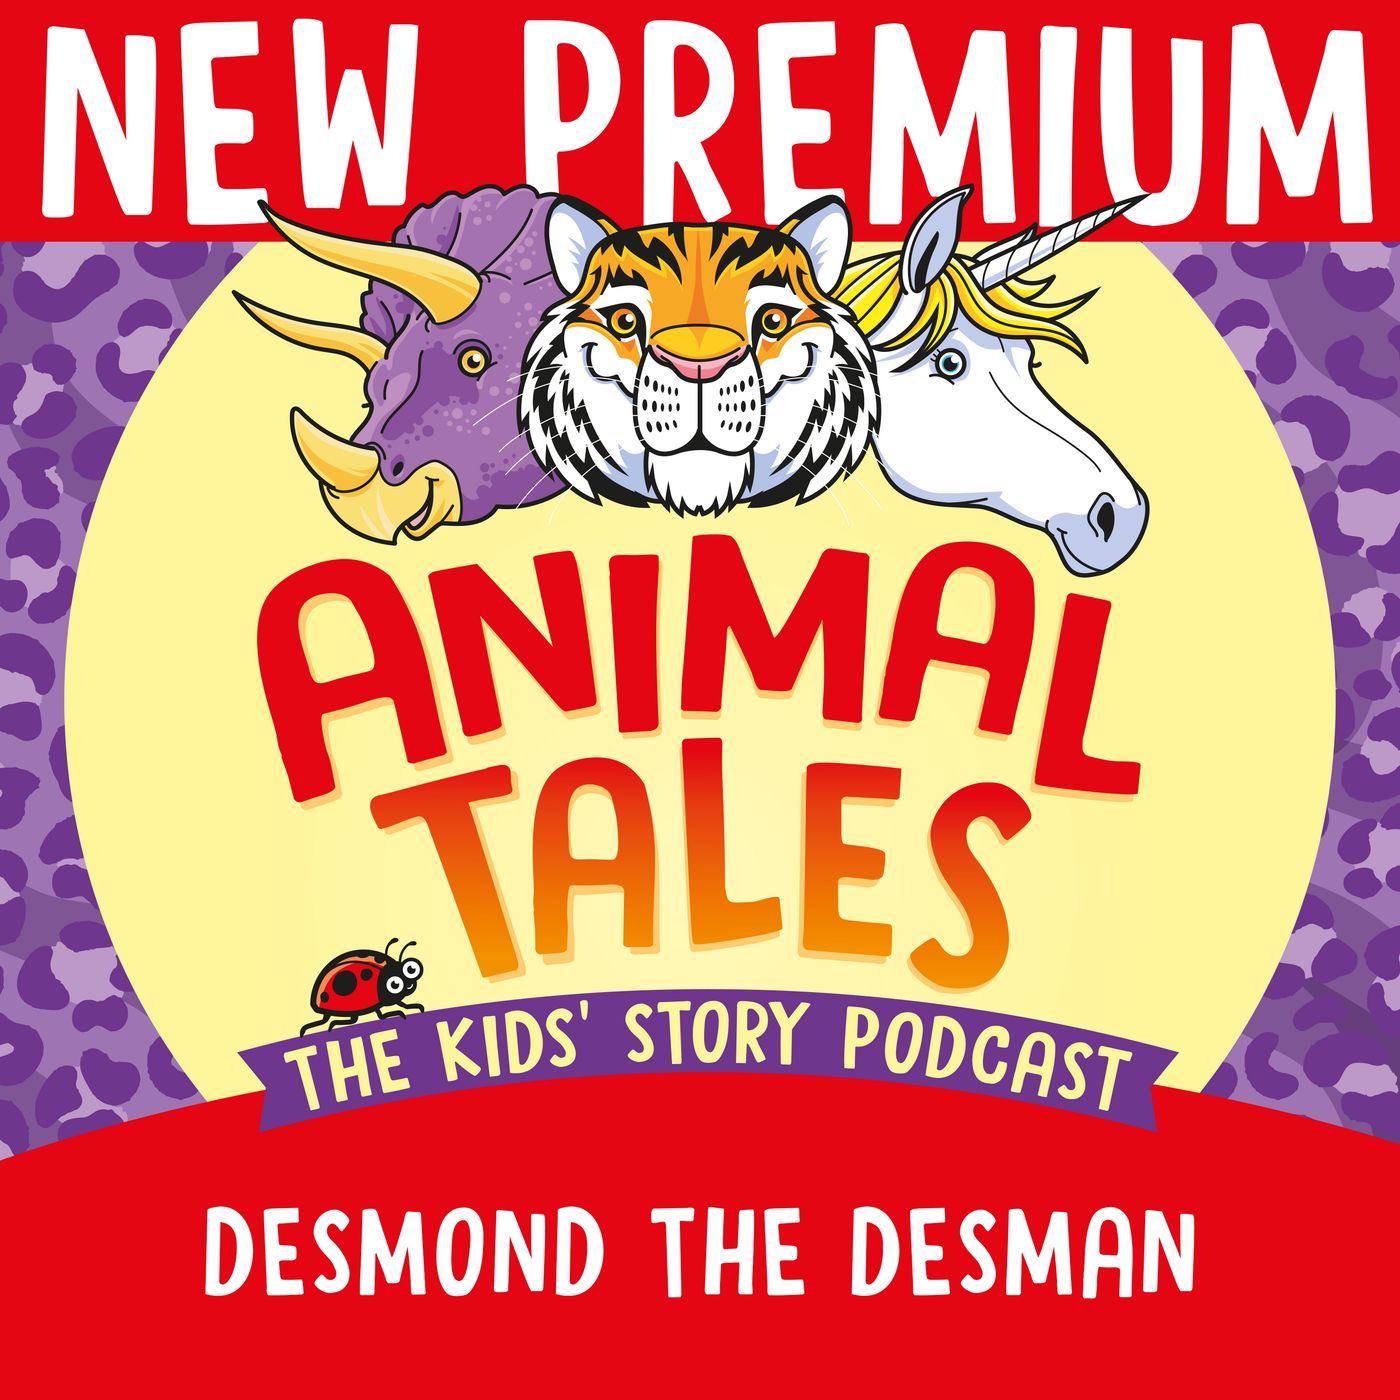 NEW PREMIUM TRAILER: Desmond The Desman